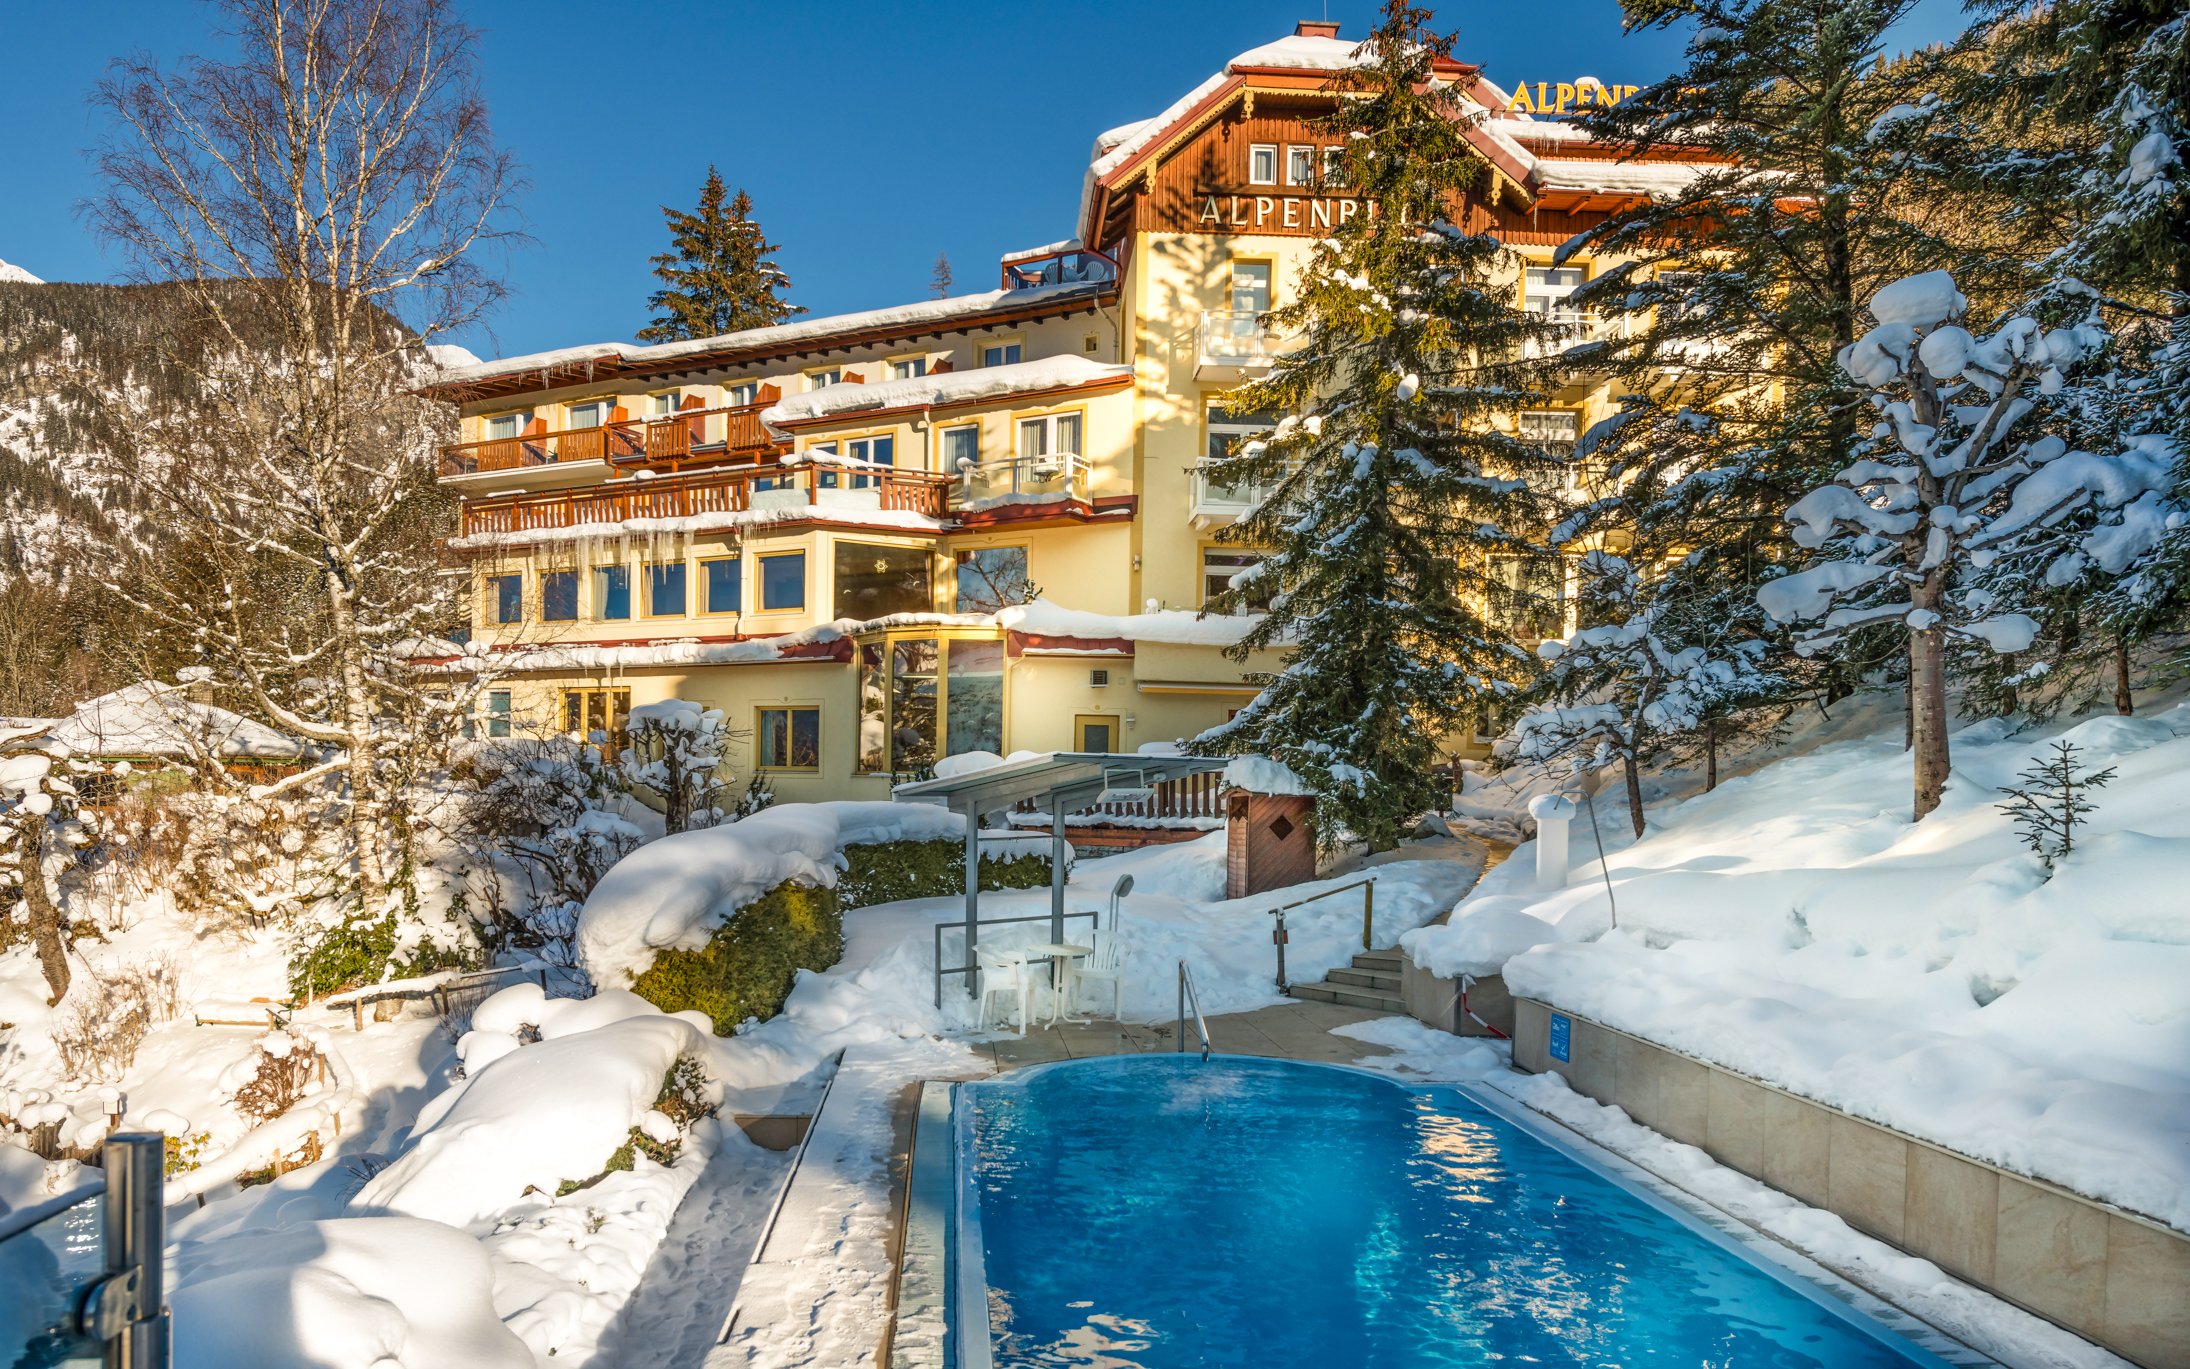 Rakúske Alpy: Zima v Hoteli Alpenblick *** s bohatým wellness, termálnym bazénom a polpenziou<br/>Hotel Alpenblick ***, Kötschachtaler Straße 17, Bad Gastein 5640, info@alpenblick-gastein.at